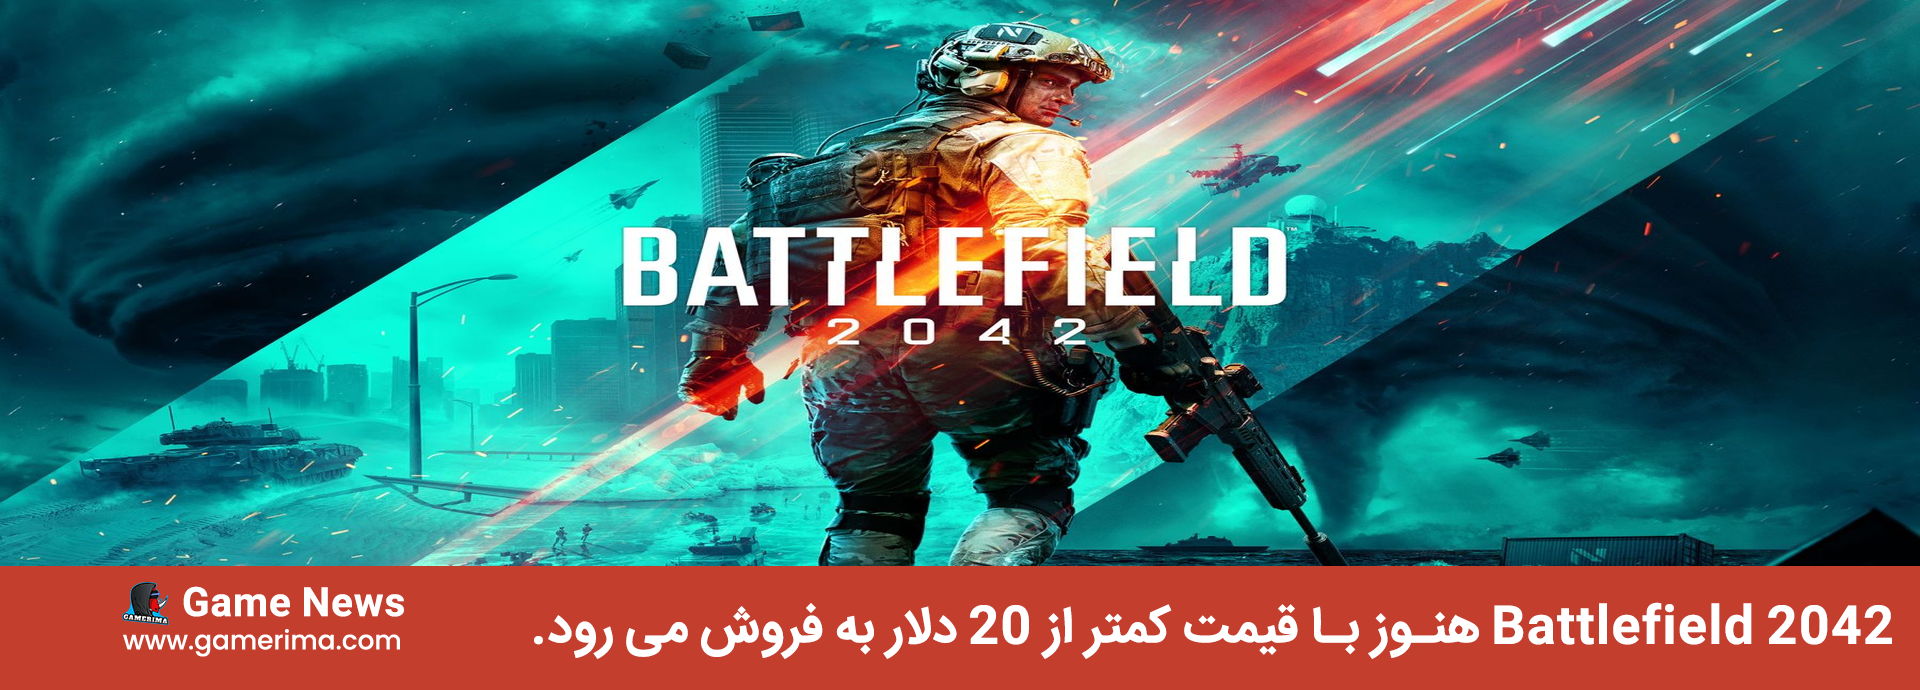 Battlefield 2042 هنوز با قیمت کمتر از 20 دلار به فروش می رود.